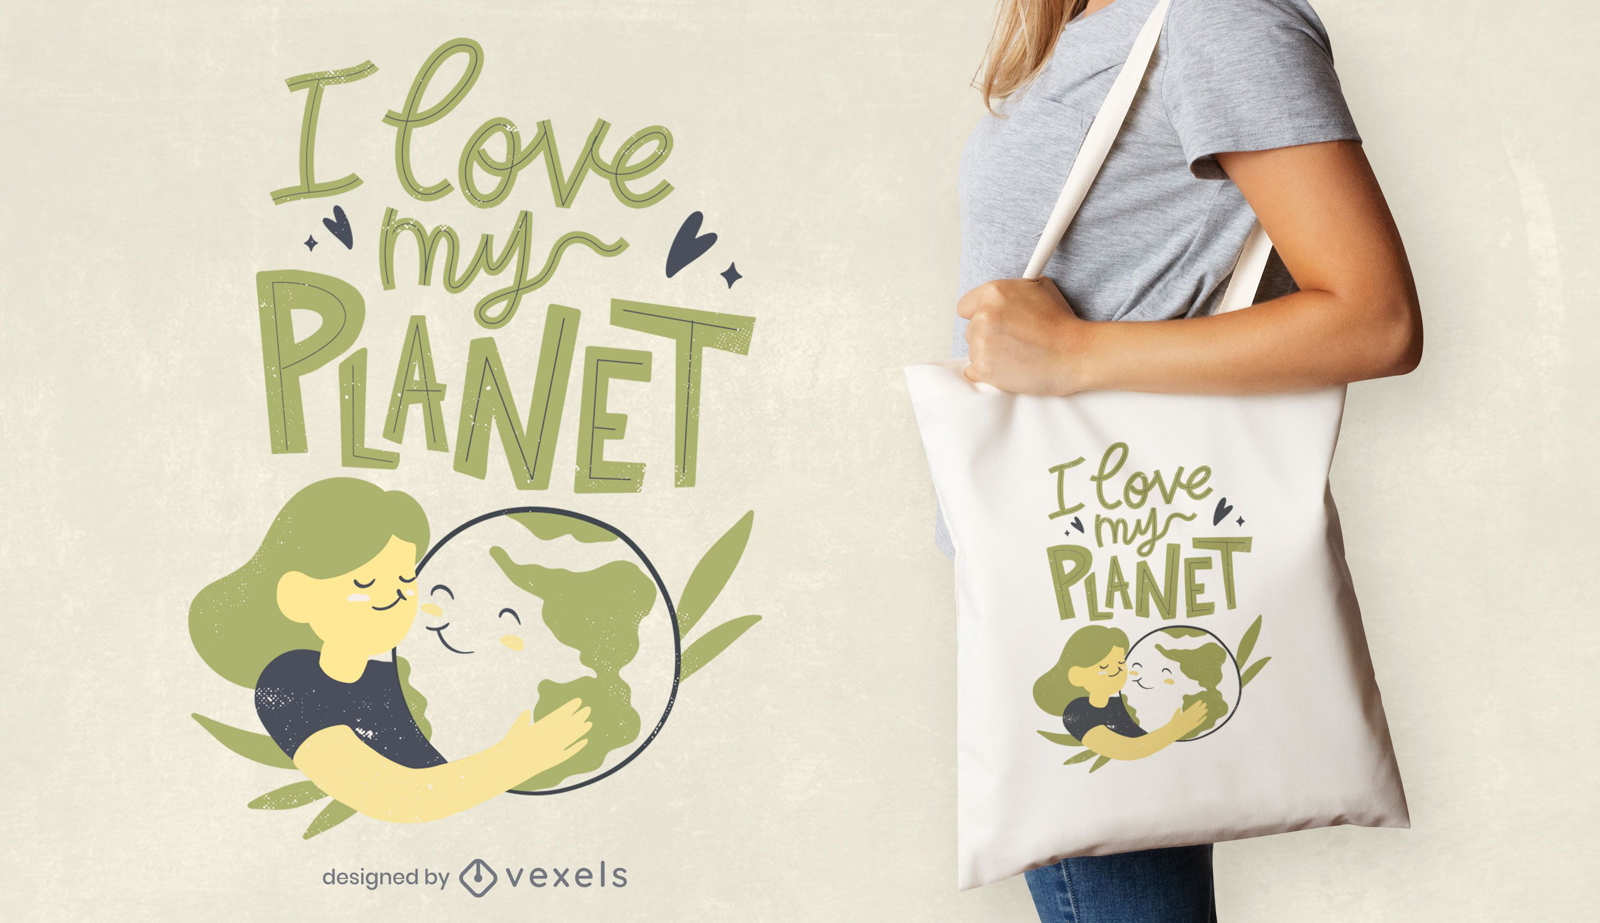 Love my planet tote bag design